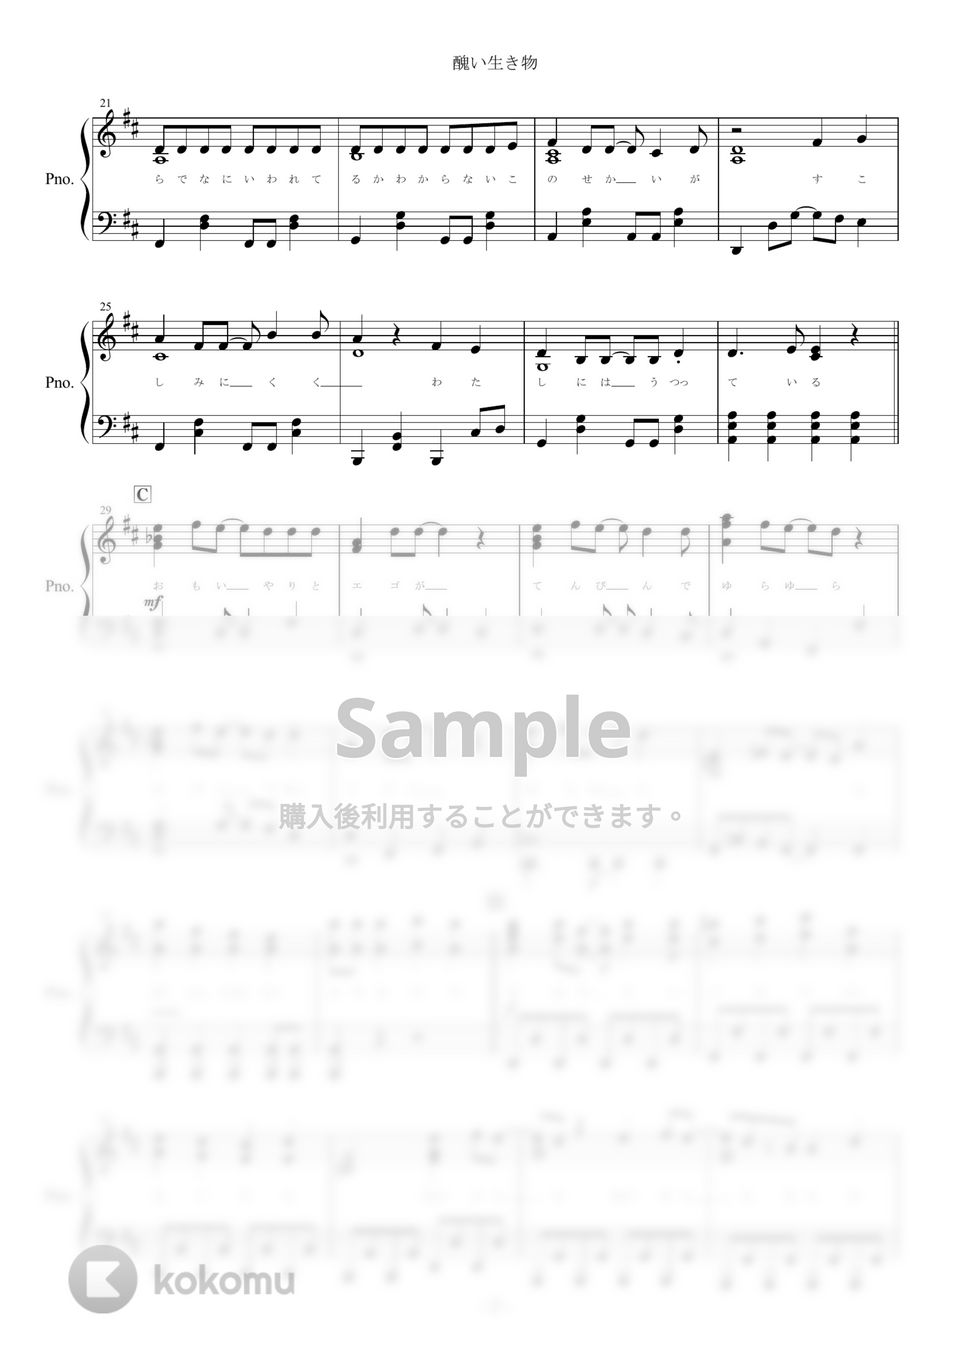 CHiCO with HoneyWorks - 醜い生き物 (ピアノ楽譜 / アニメ『裏世界ピクニック』OP / 全８ページ / 歌詞付き) by yoshi